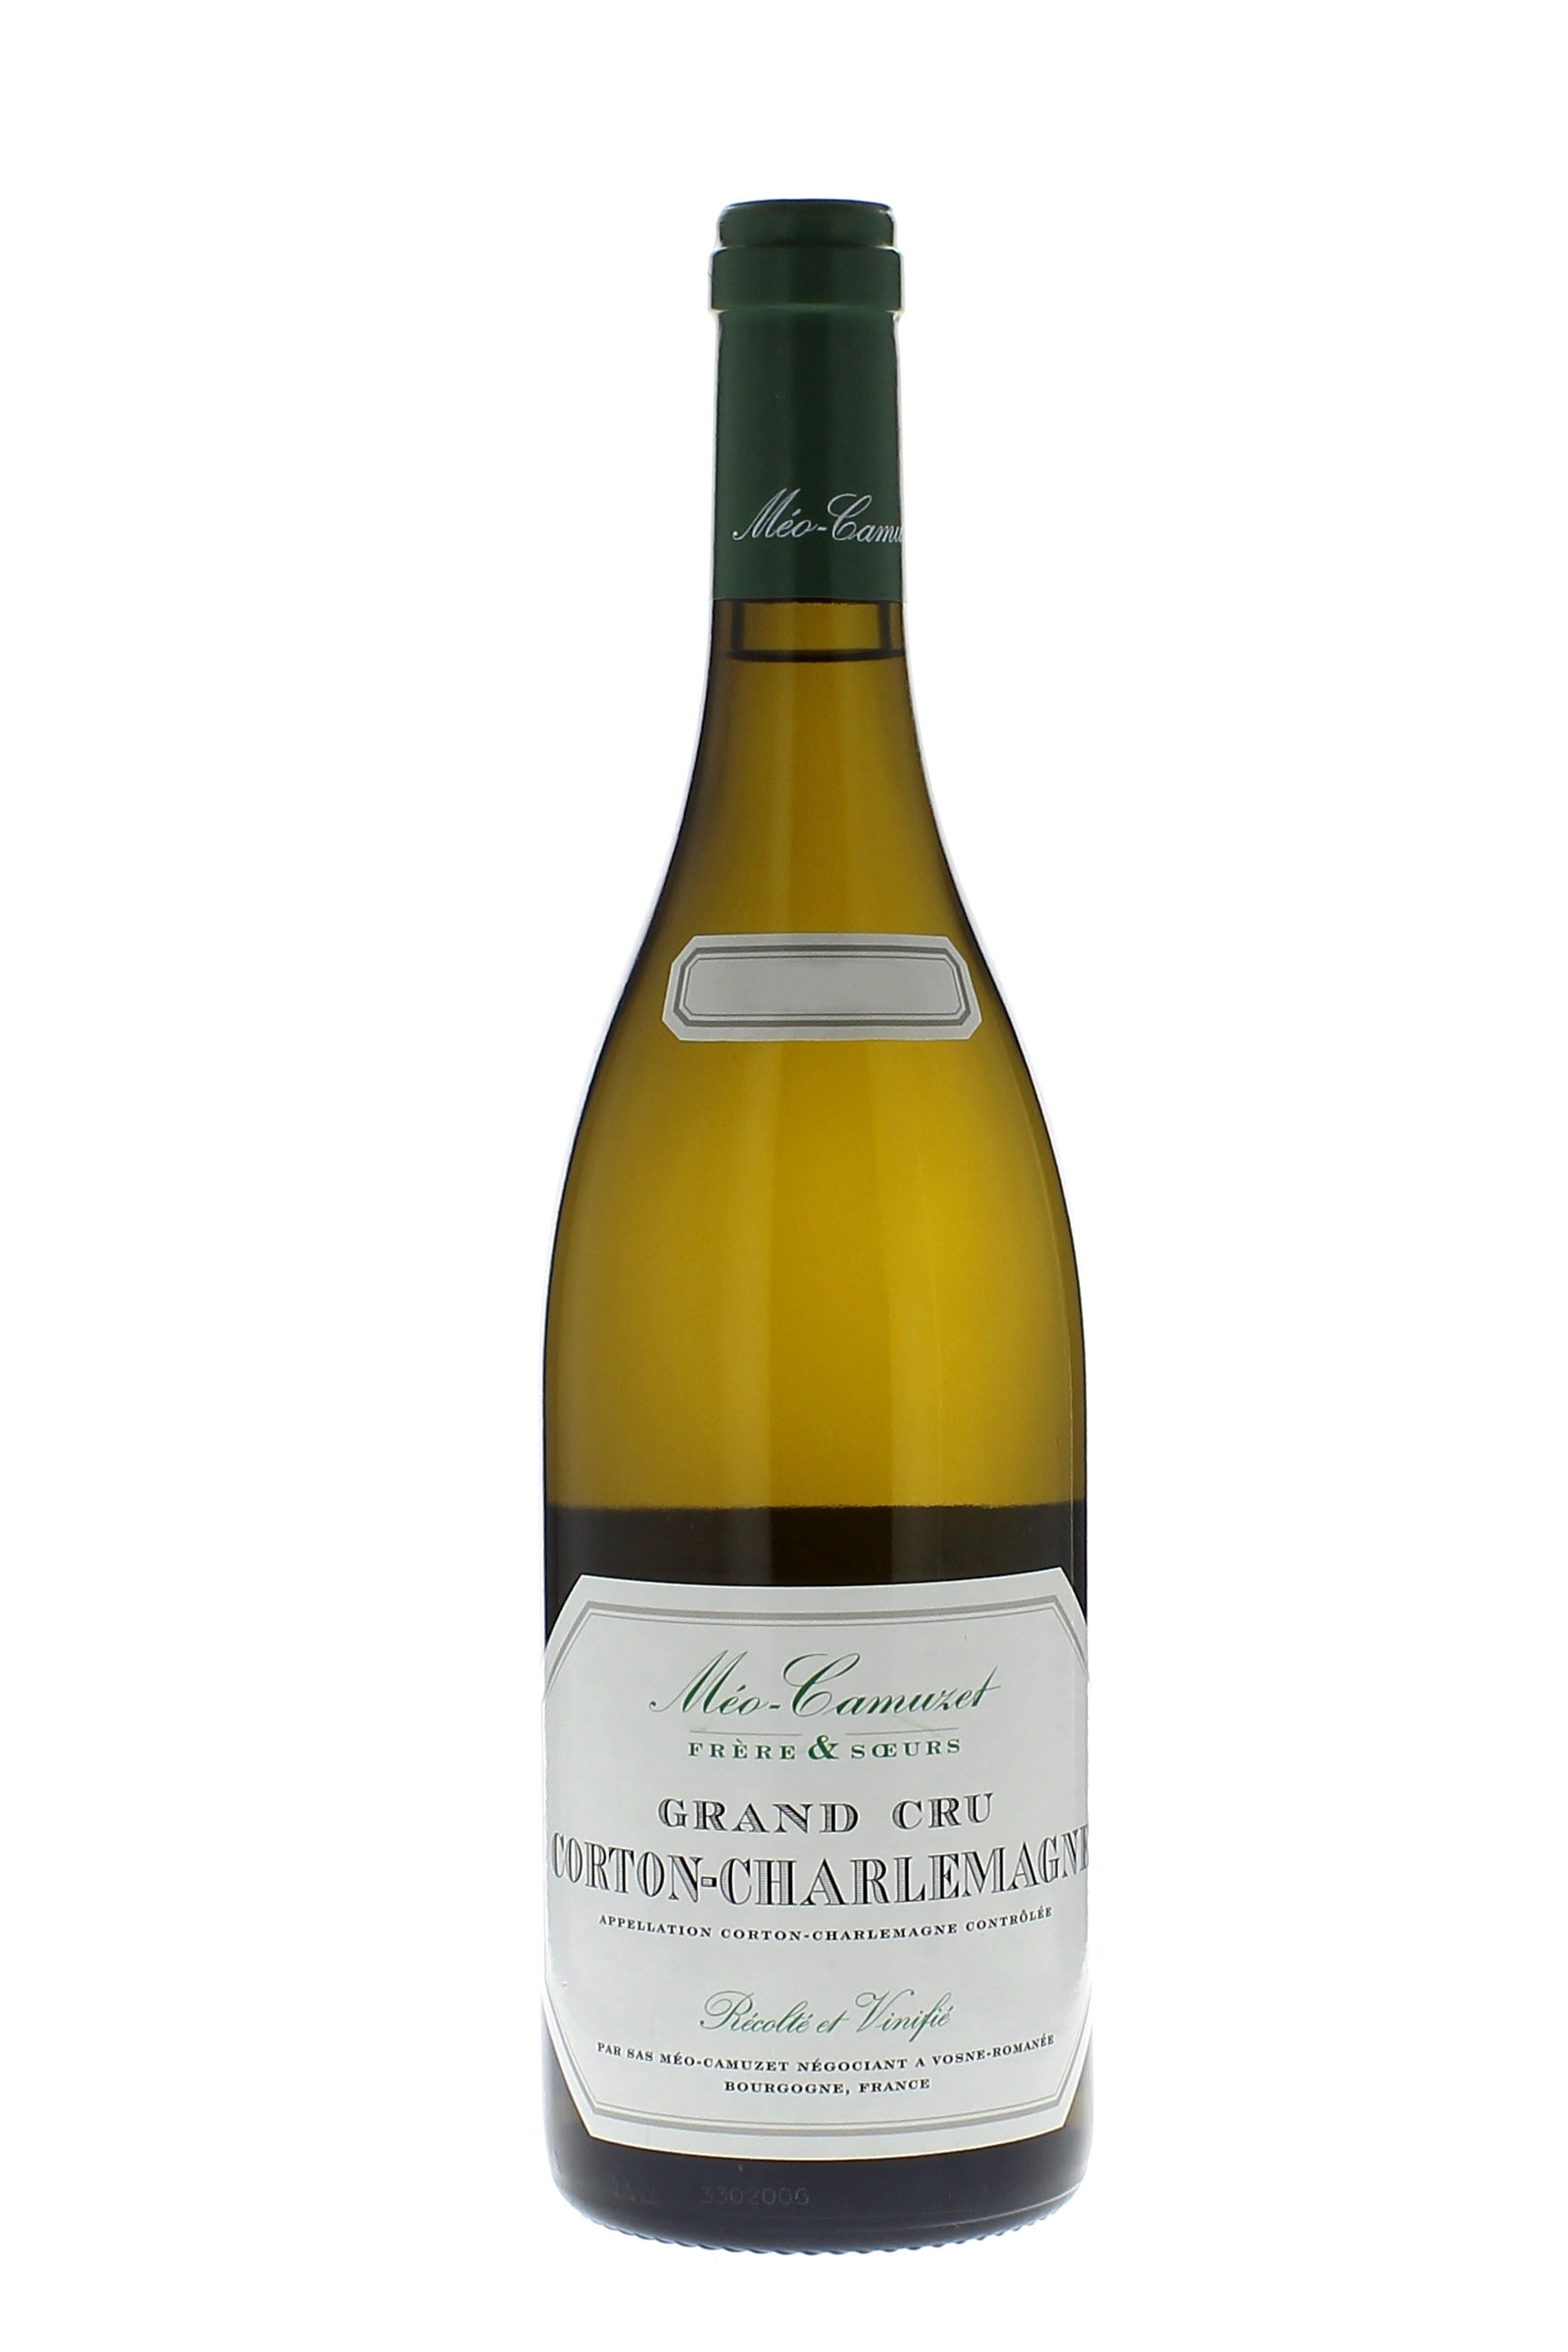 Corton charlemagne grand cru 2016  MEO-CAMUZET Frre et S., Bourgogne blanc